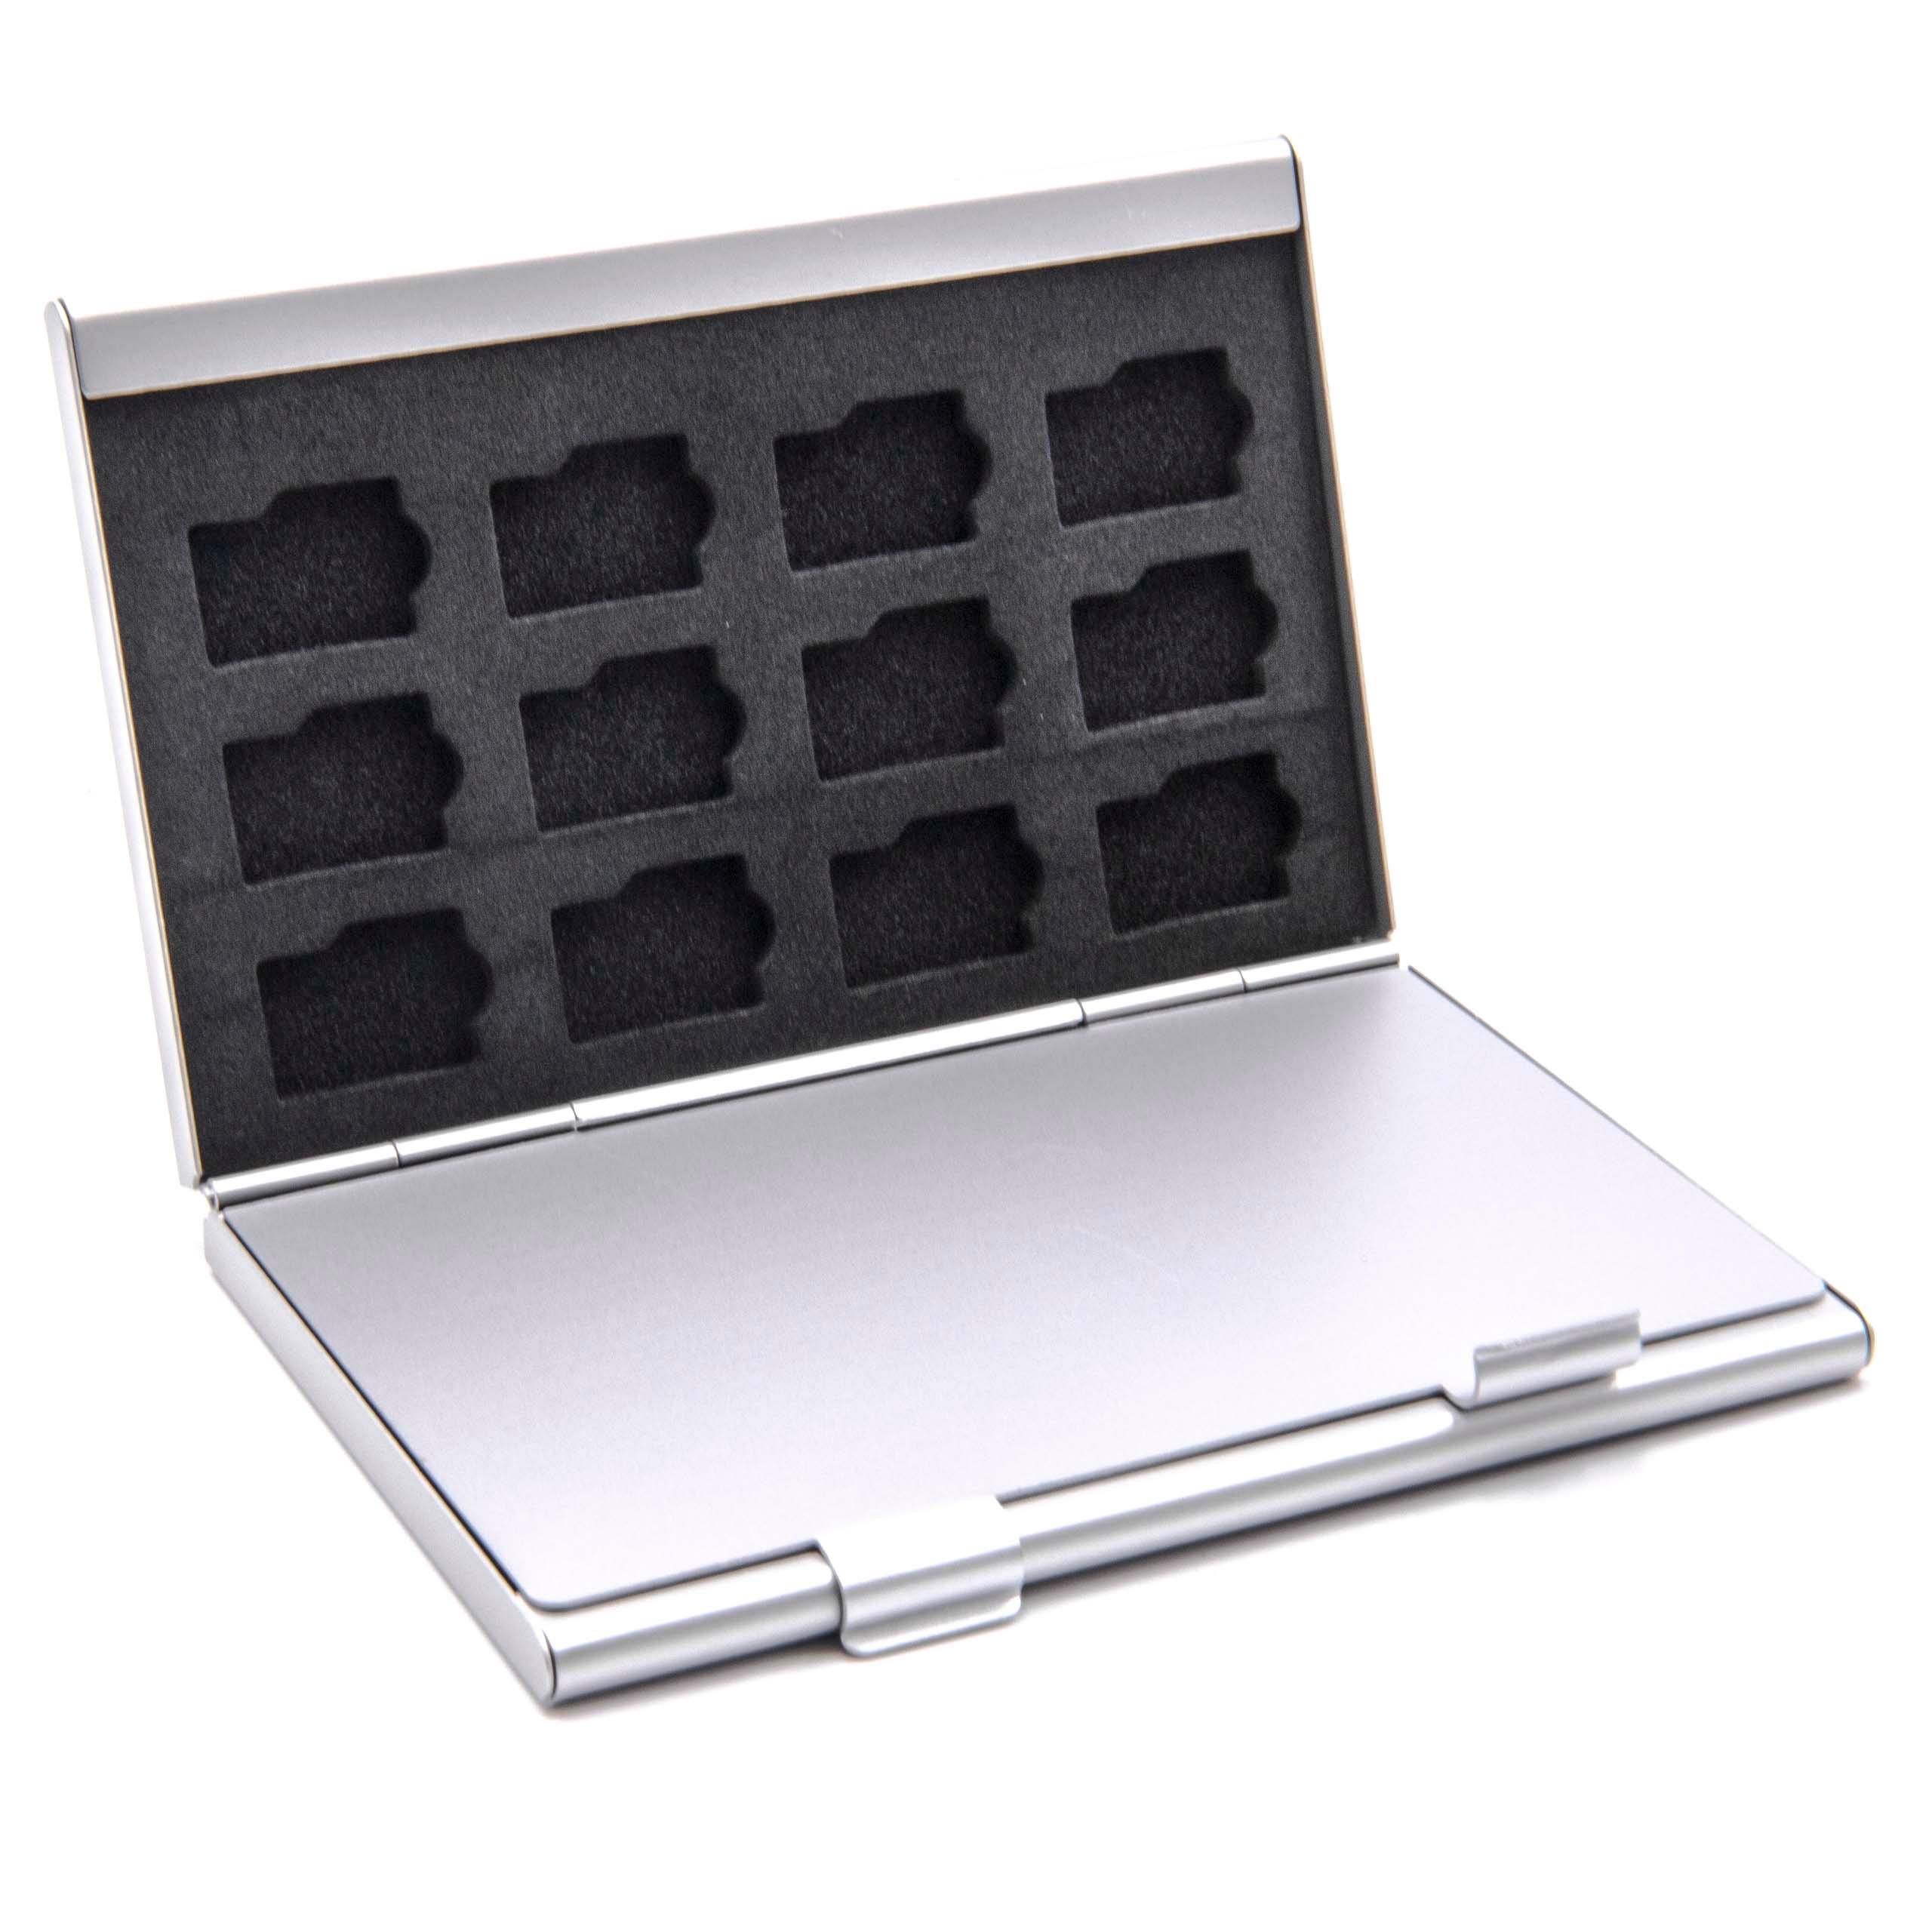 Etui passend für Speicherkarten 24x MicroSD - Case, Aluminium, silber